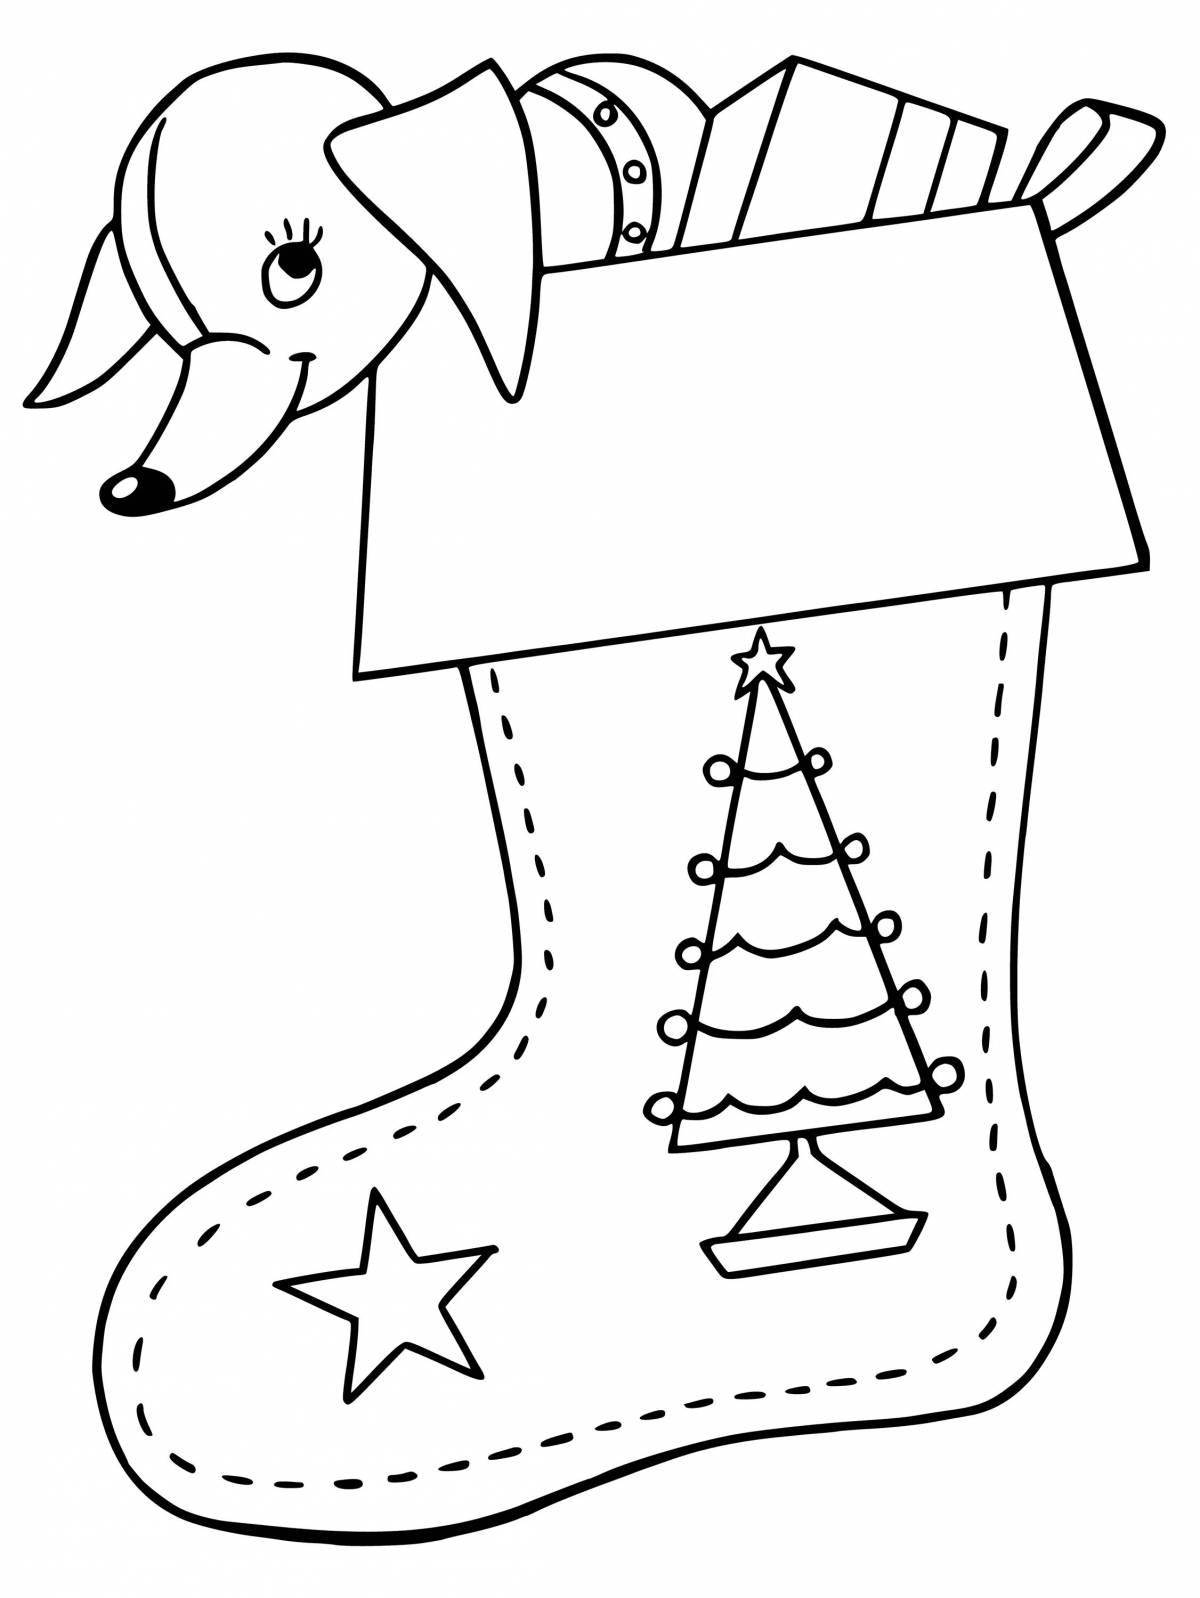 Coloring page glamorous Christmas boot